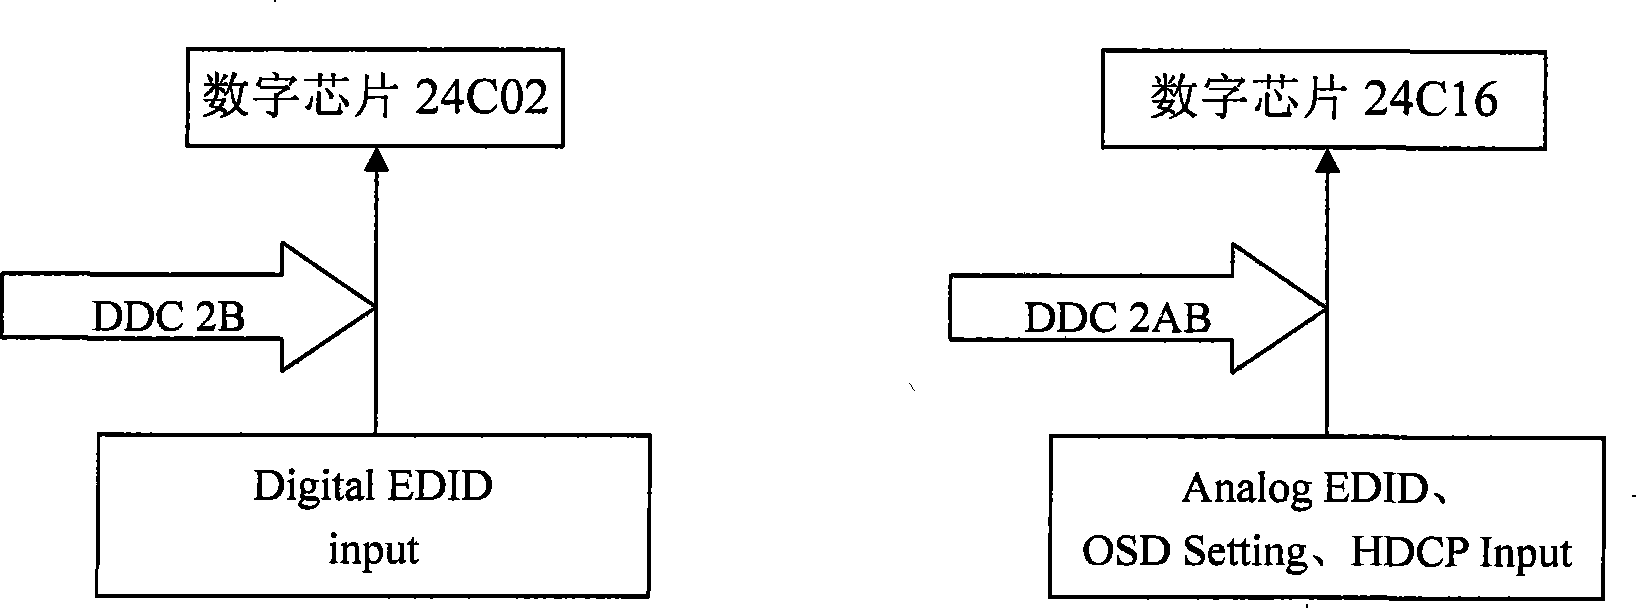 LCD digital television register address shared method